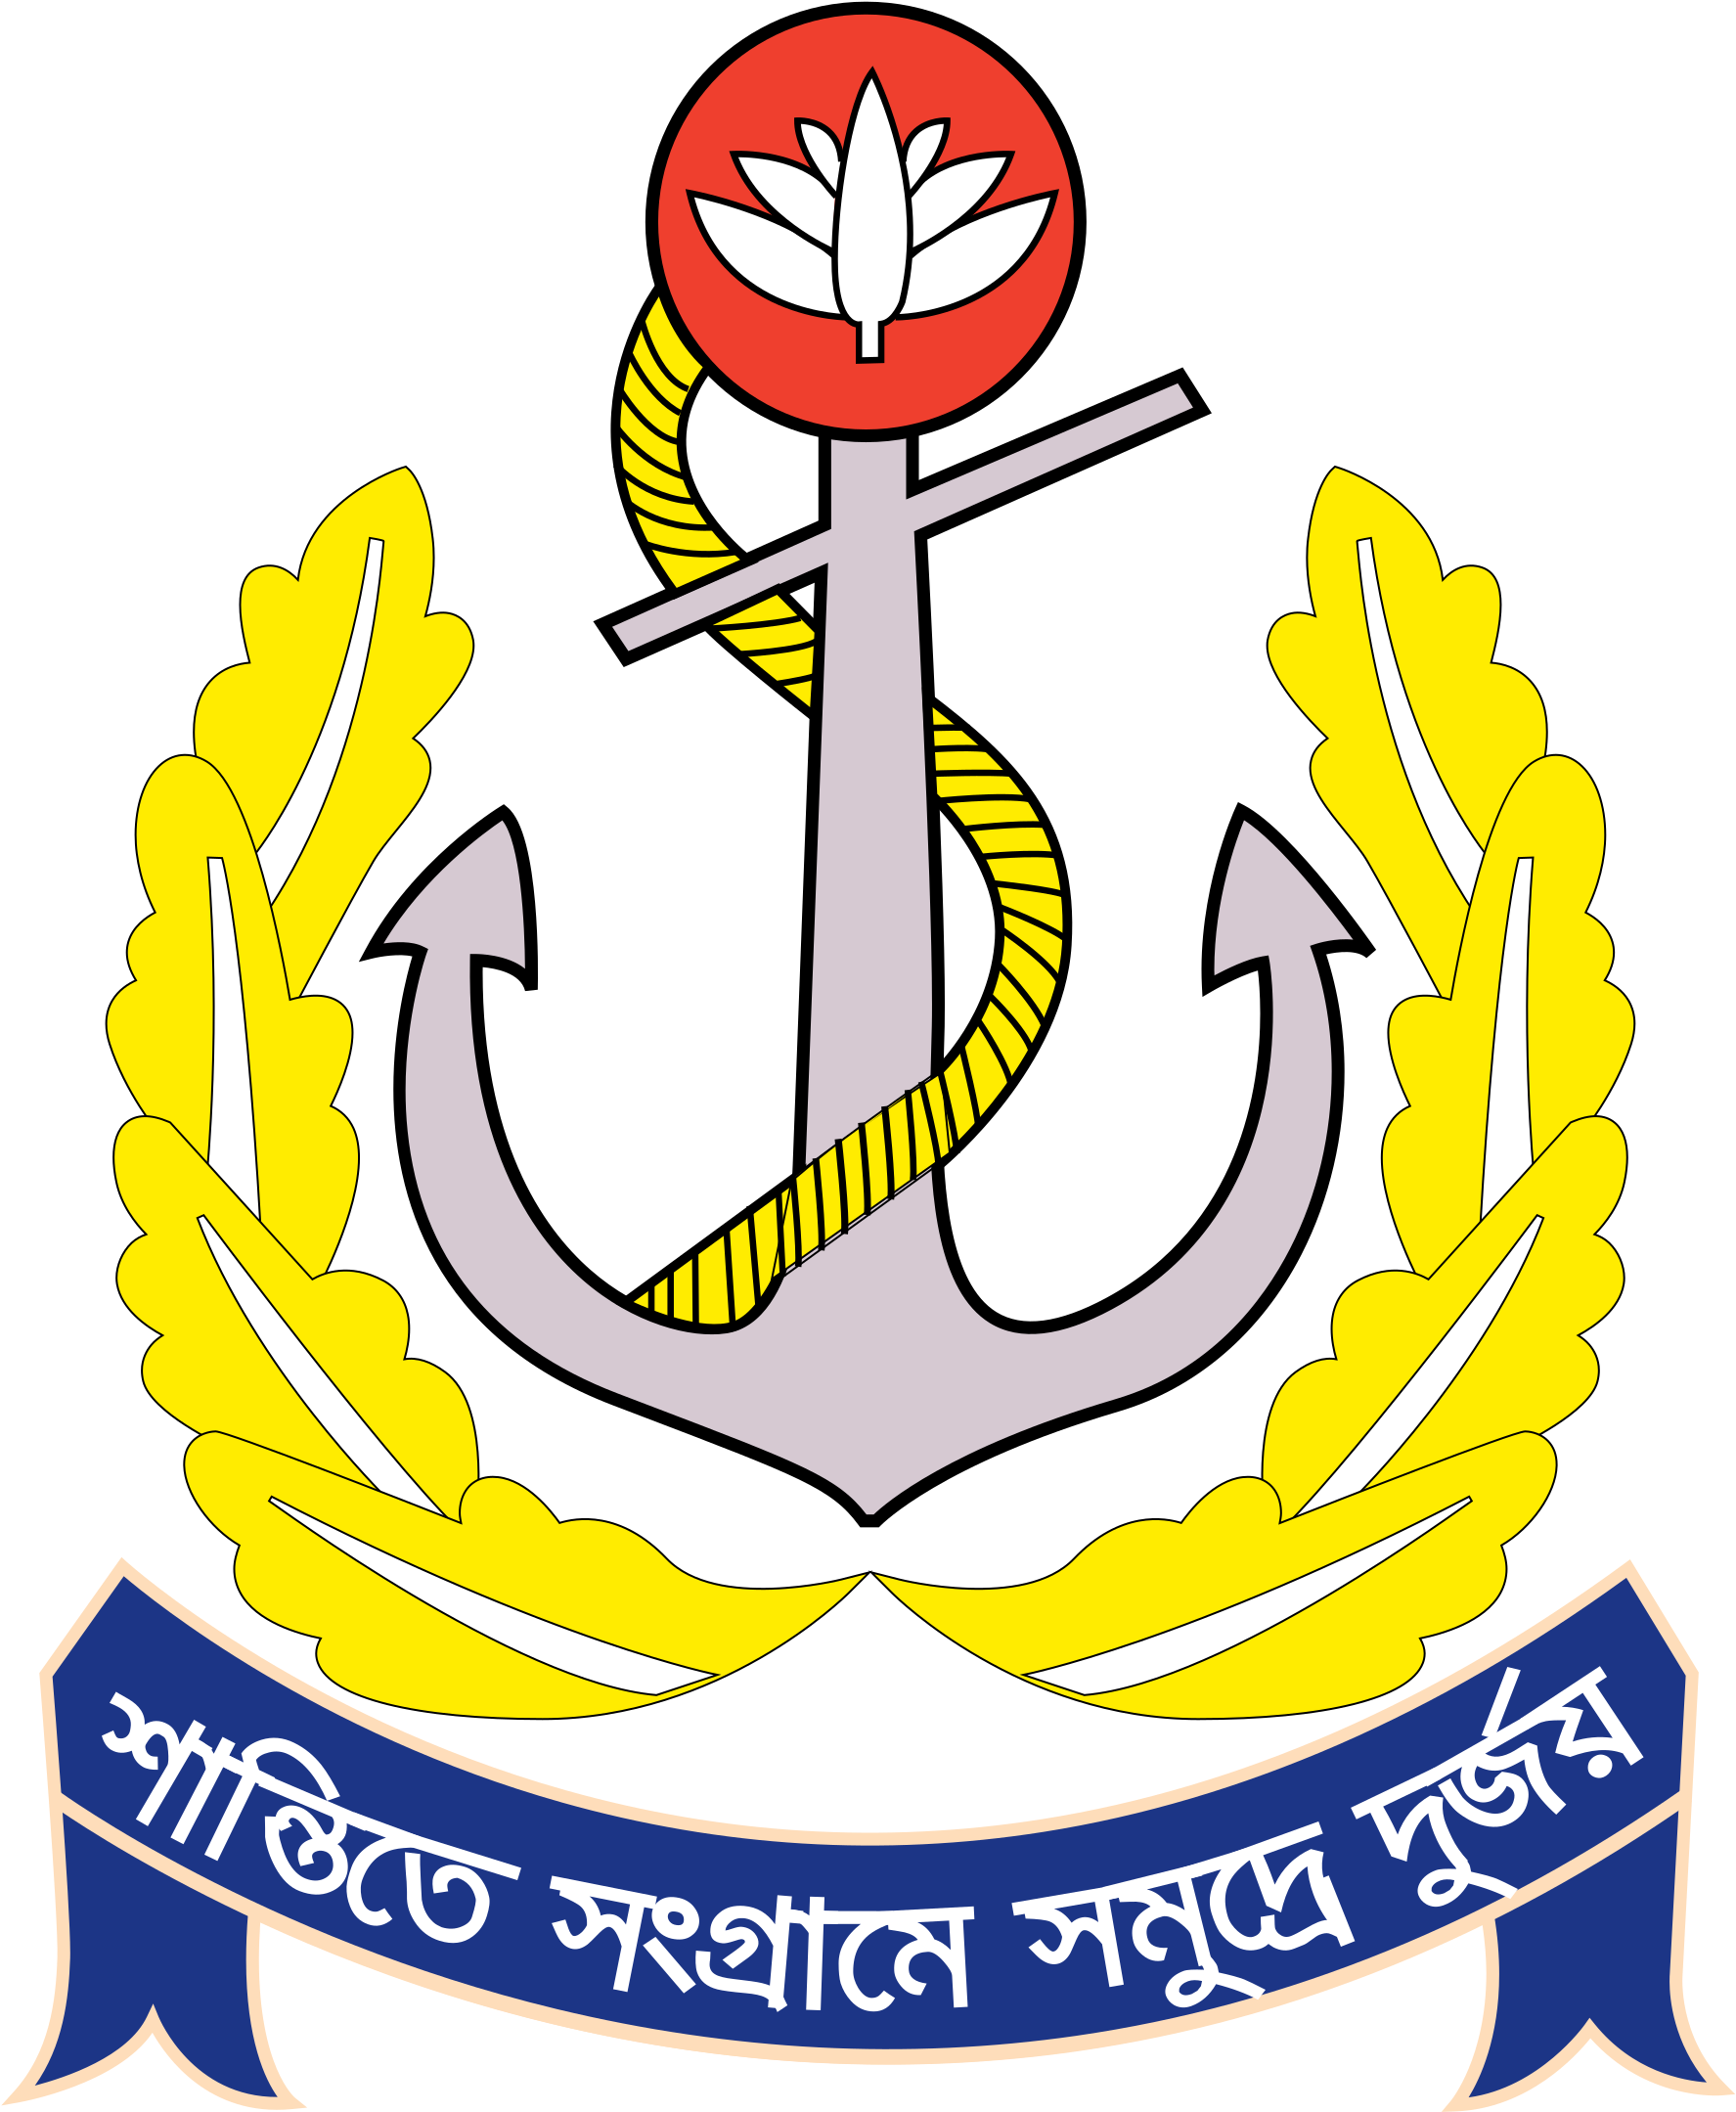 A Logo Of A Military Insignia